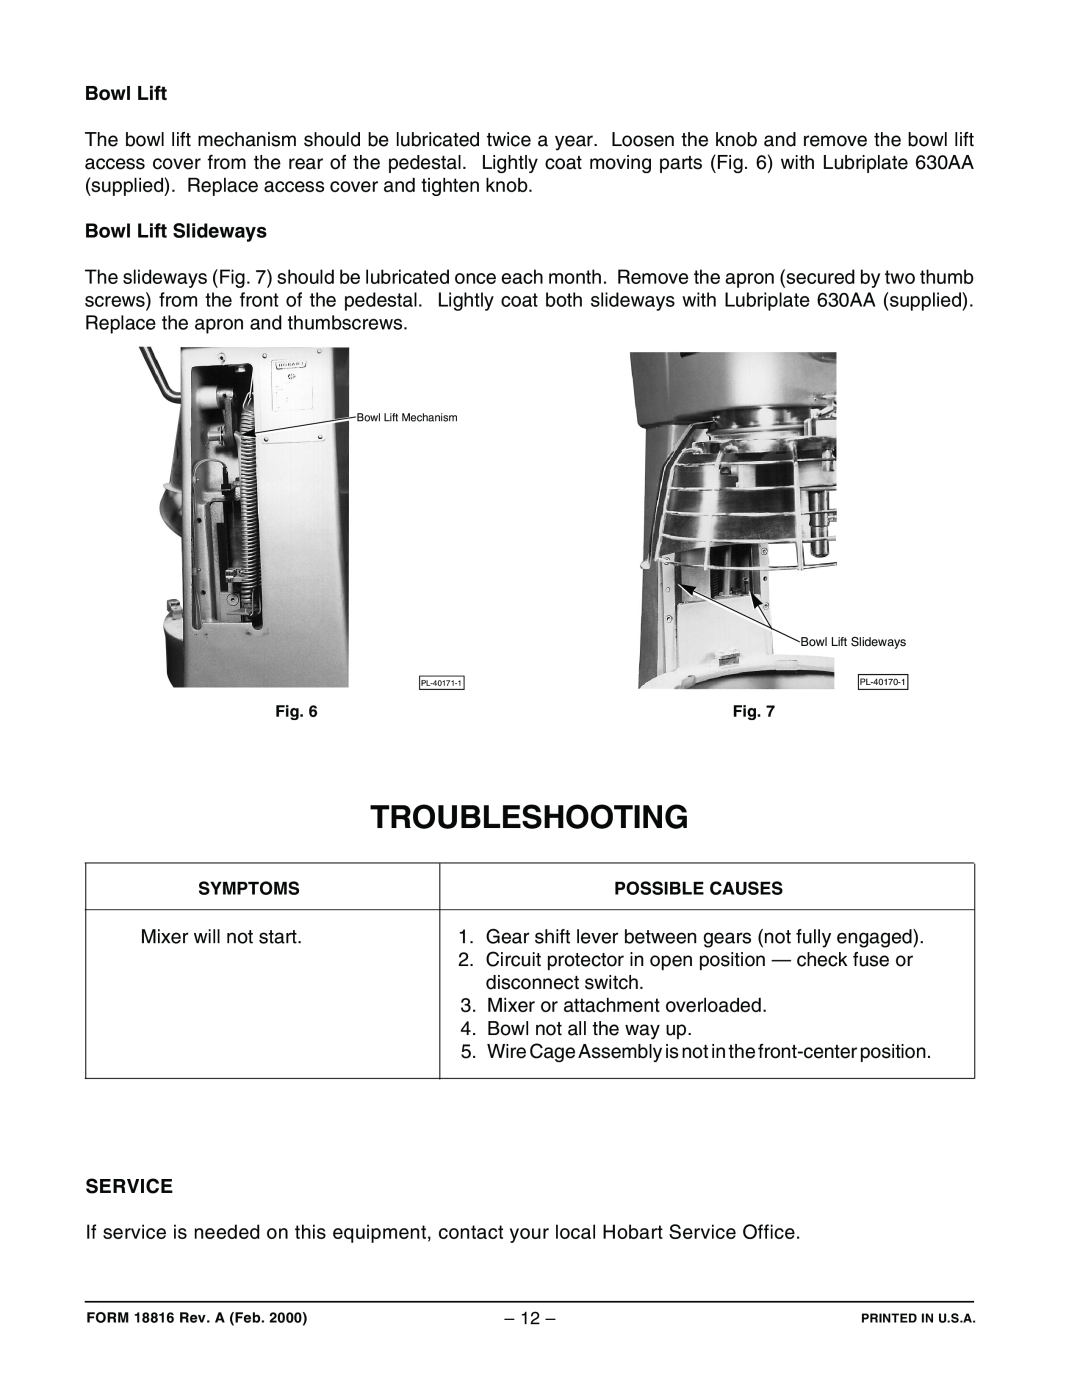 Hobart D300 manual Troubleshooting, Bowl Lift Slideways, Service 